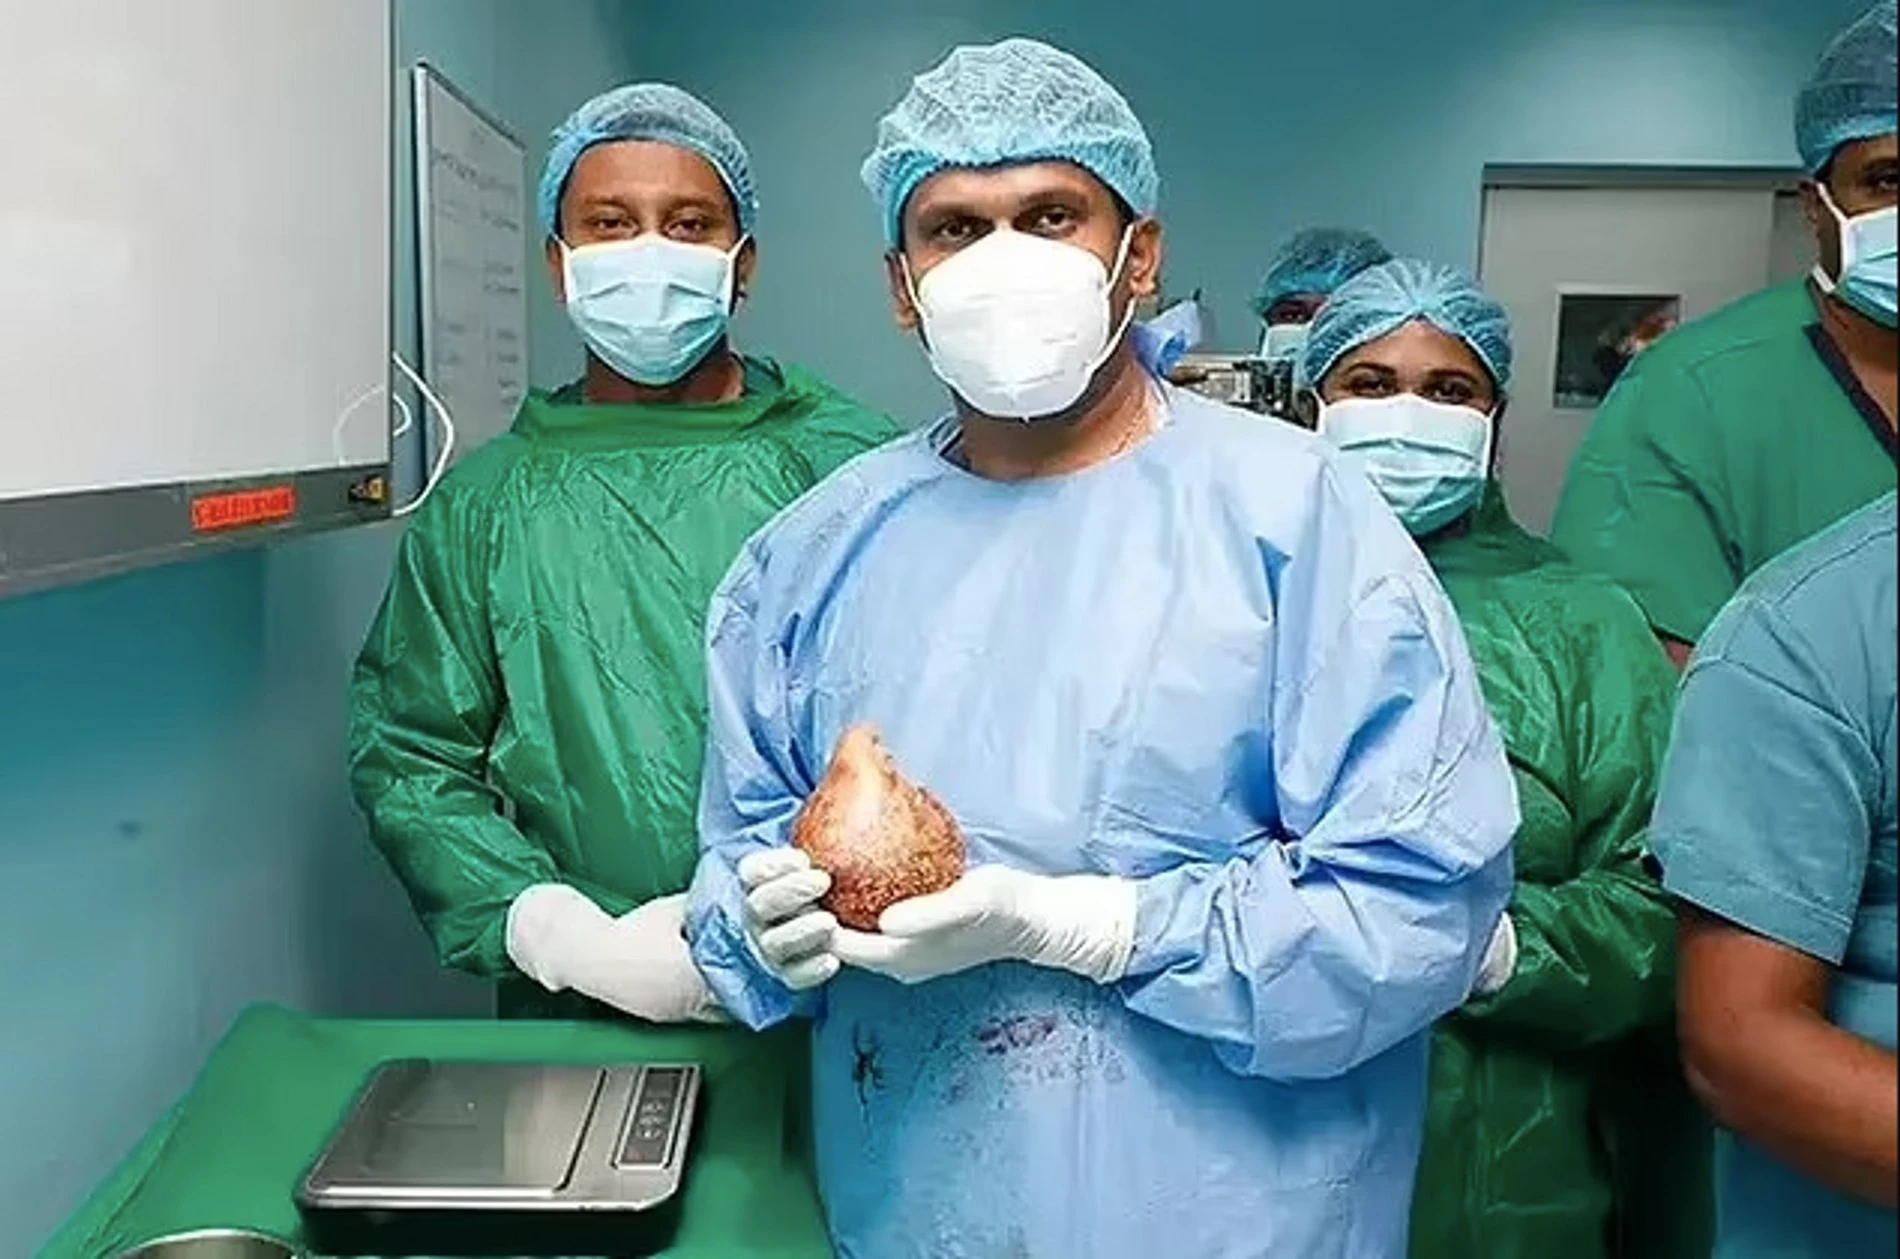 Команда хирургов, удаливших камень
Фото: Daily Mail